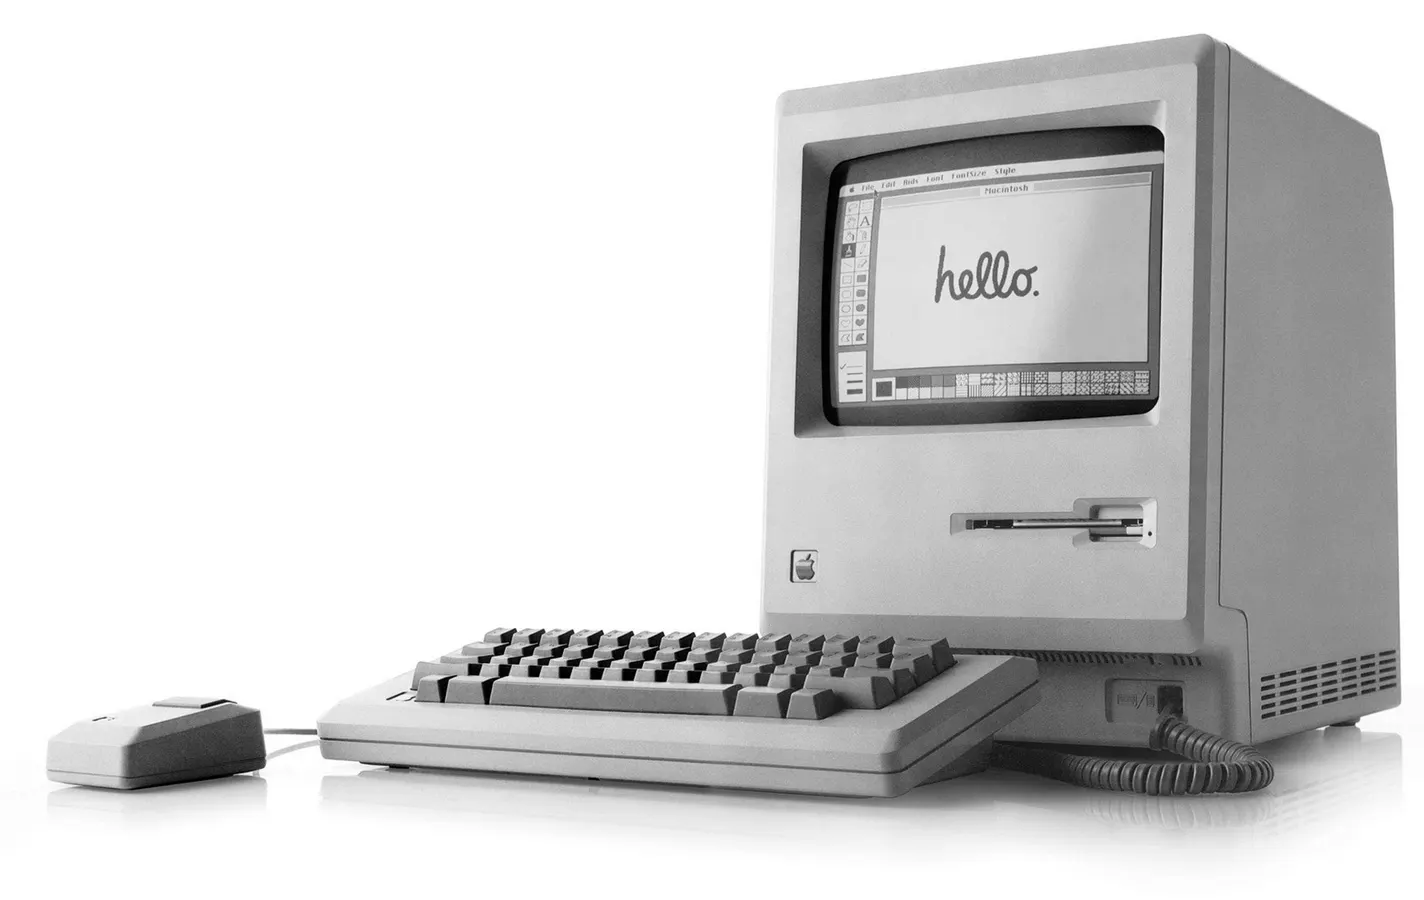 Macintosh: Η συσκευή που έβαλε τους υπολογιστές στη ζωή μας γίνεται 40 ετών (βίντεο)